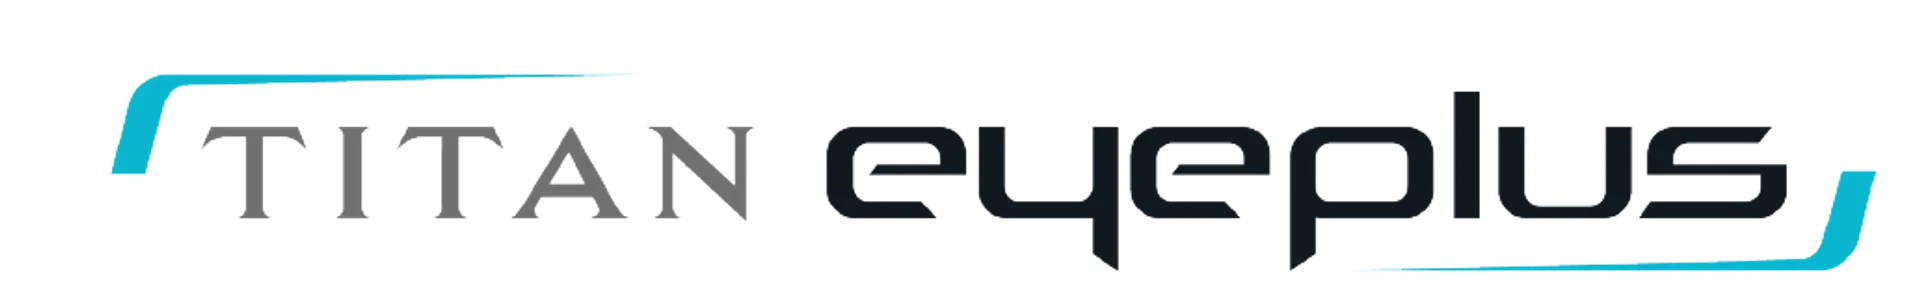 TITAN EYEPLUS logo. Current weekly ad